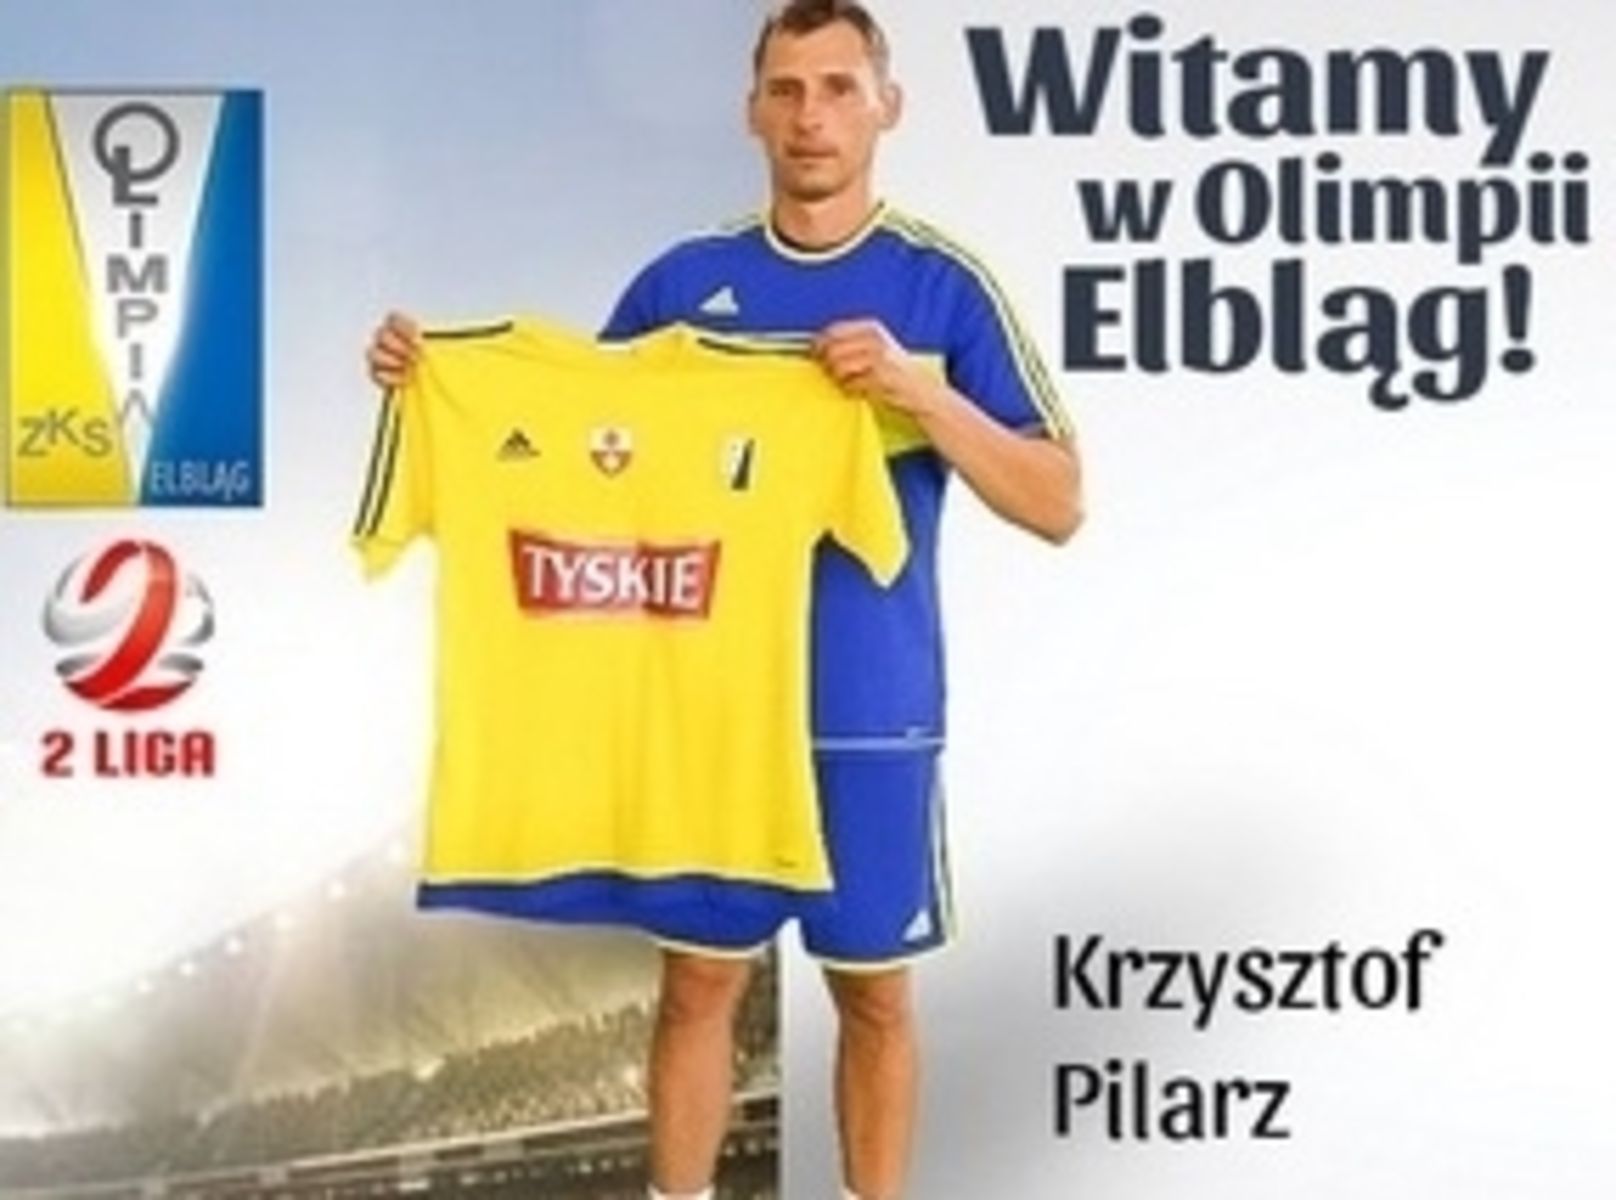 Pilarz trafił do Olimpii Elbląg. Fot. olimpia.elblag.com.pl